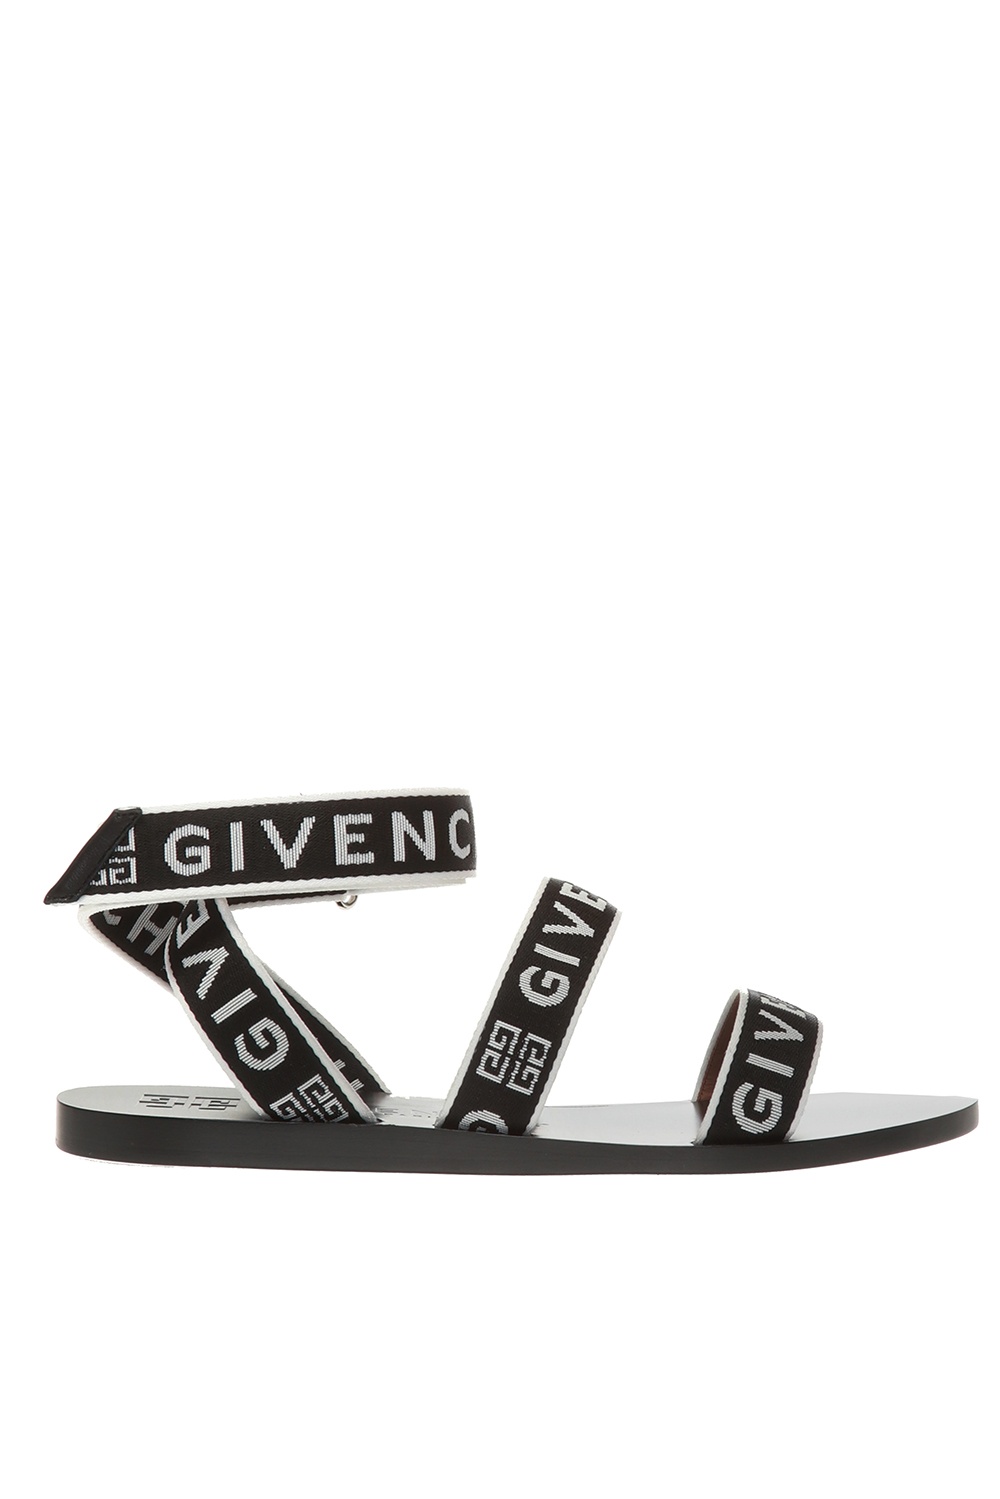 Givenchy '4G' logo sandals | Women's Shoes | Vitkac